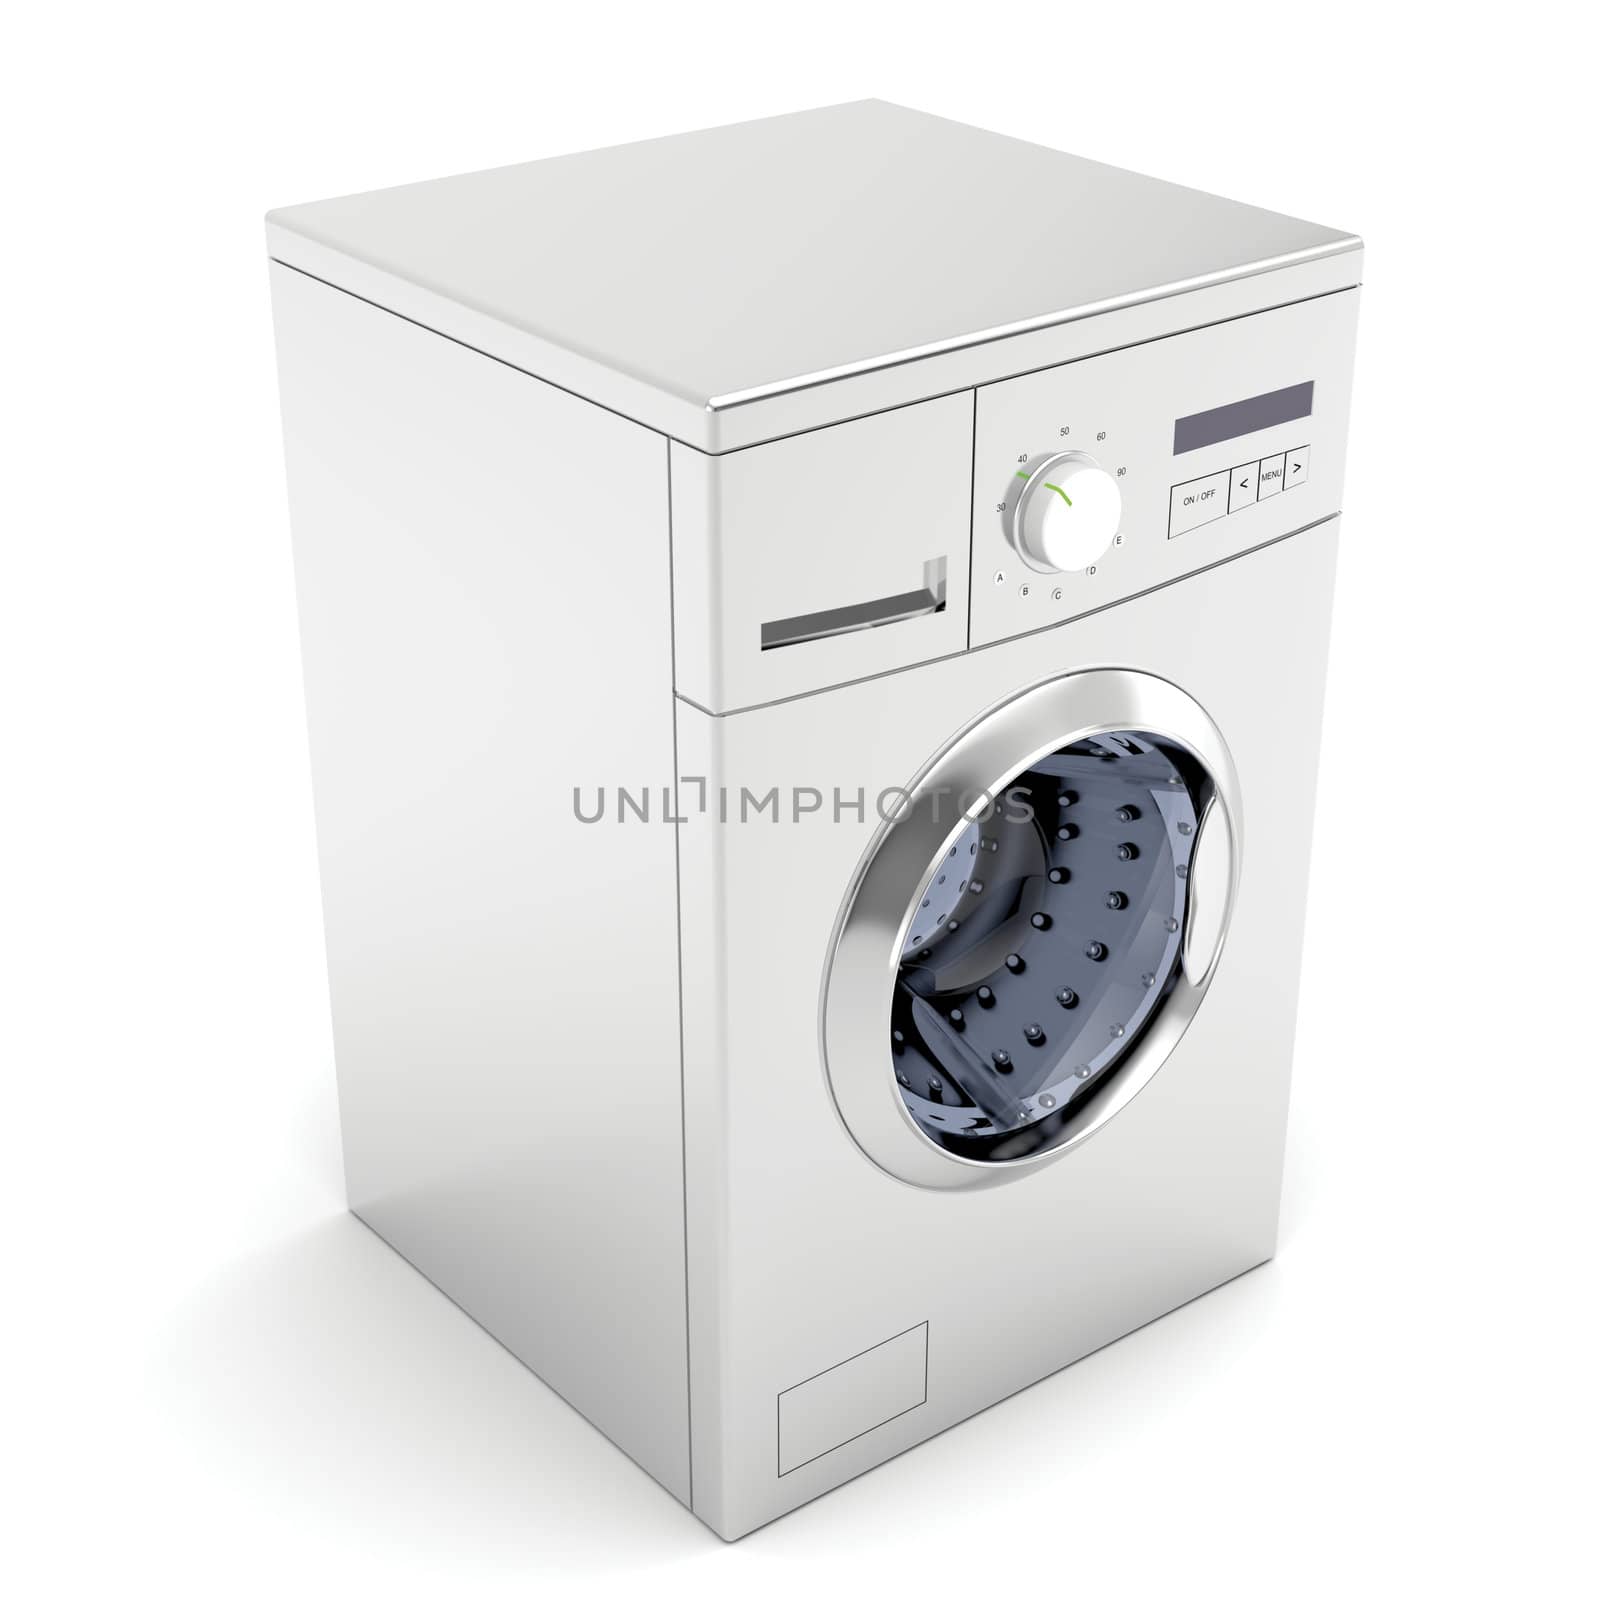 Washing machine by magraphics